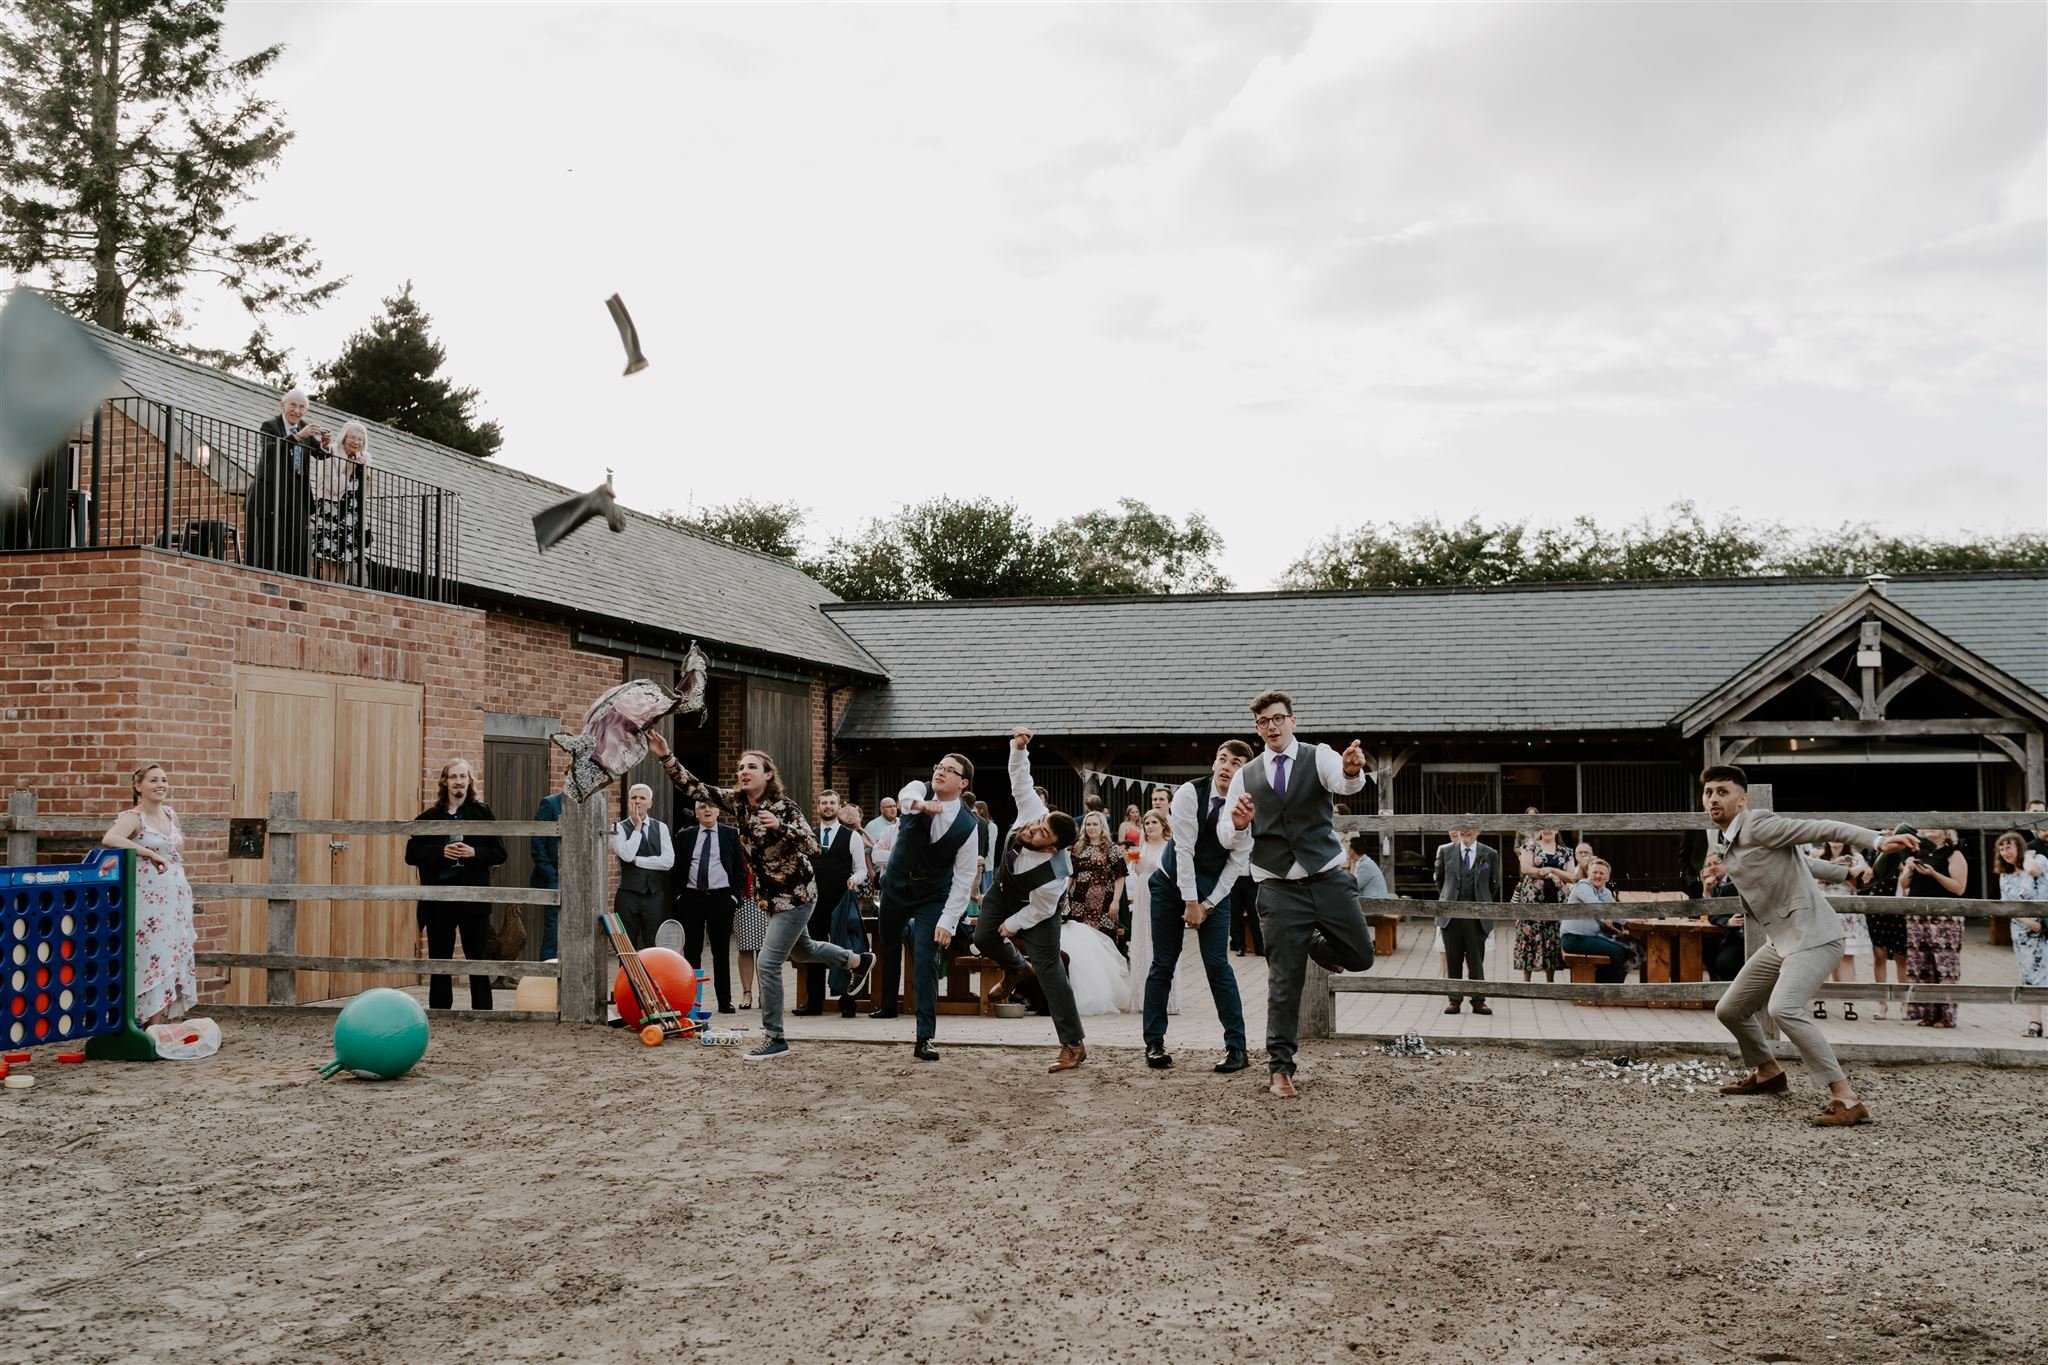 welly wanging outdoor wedding fun documentary wedding photographs Nottingham